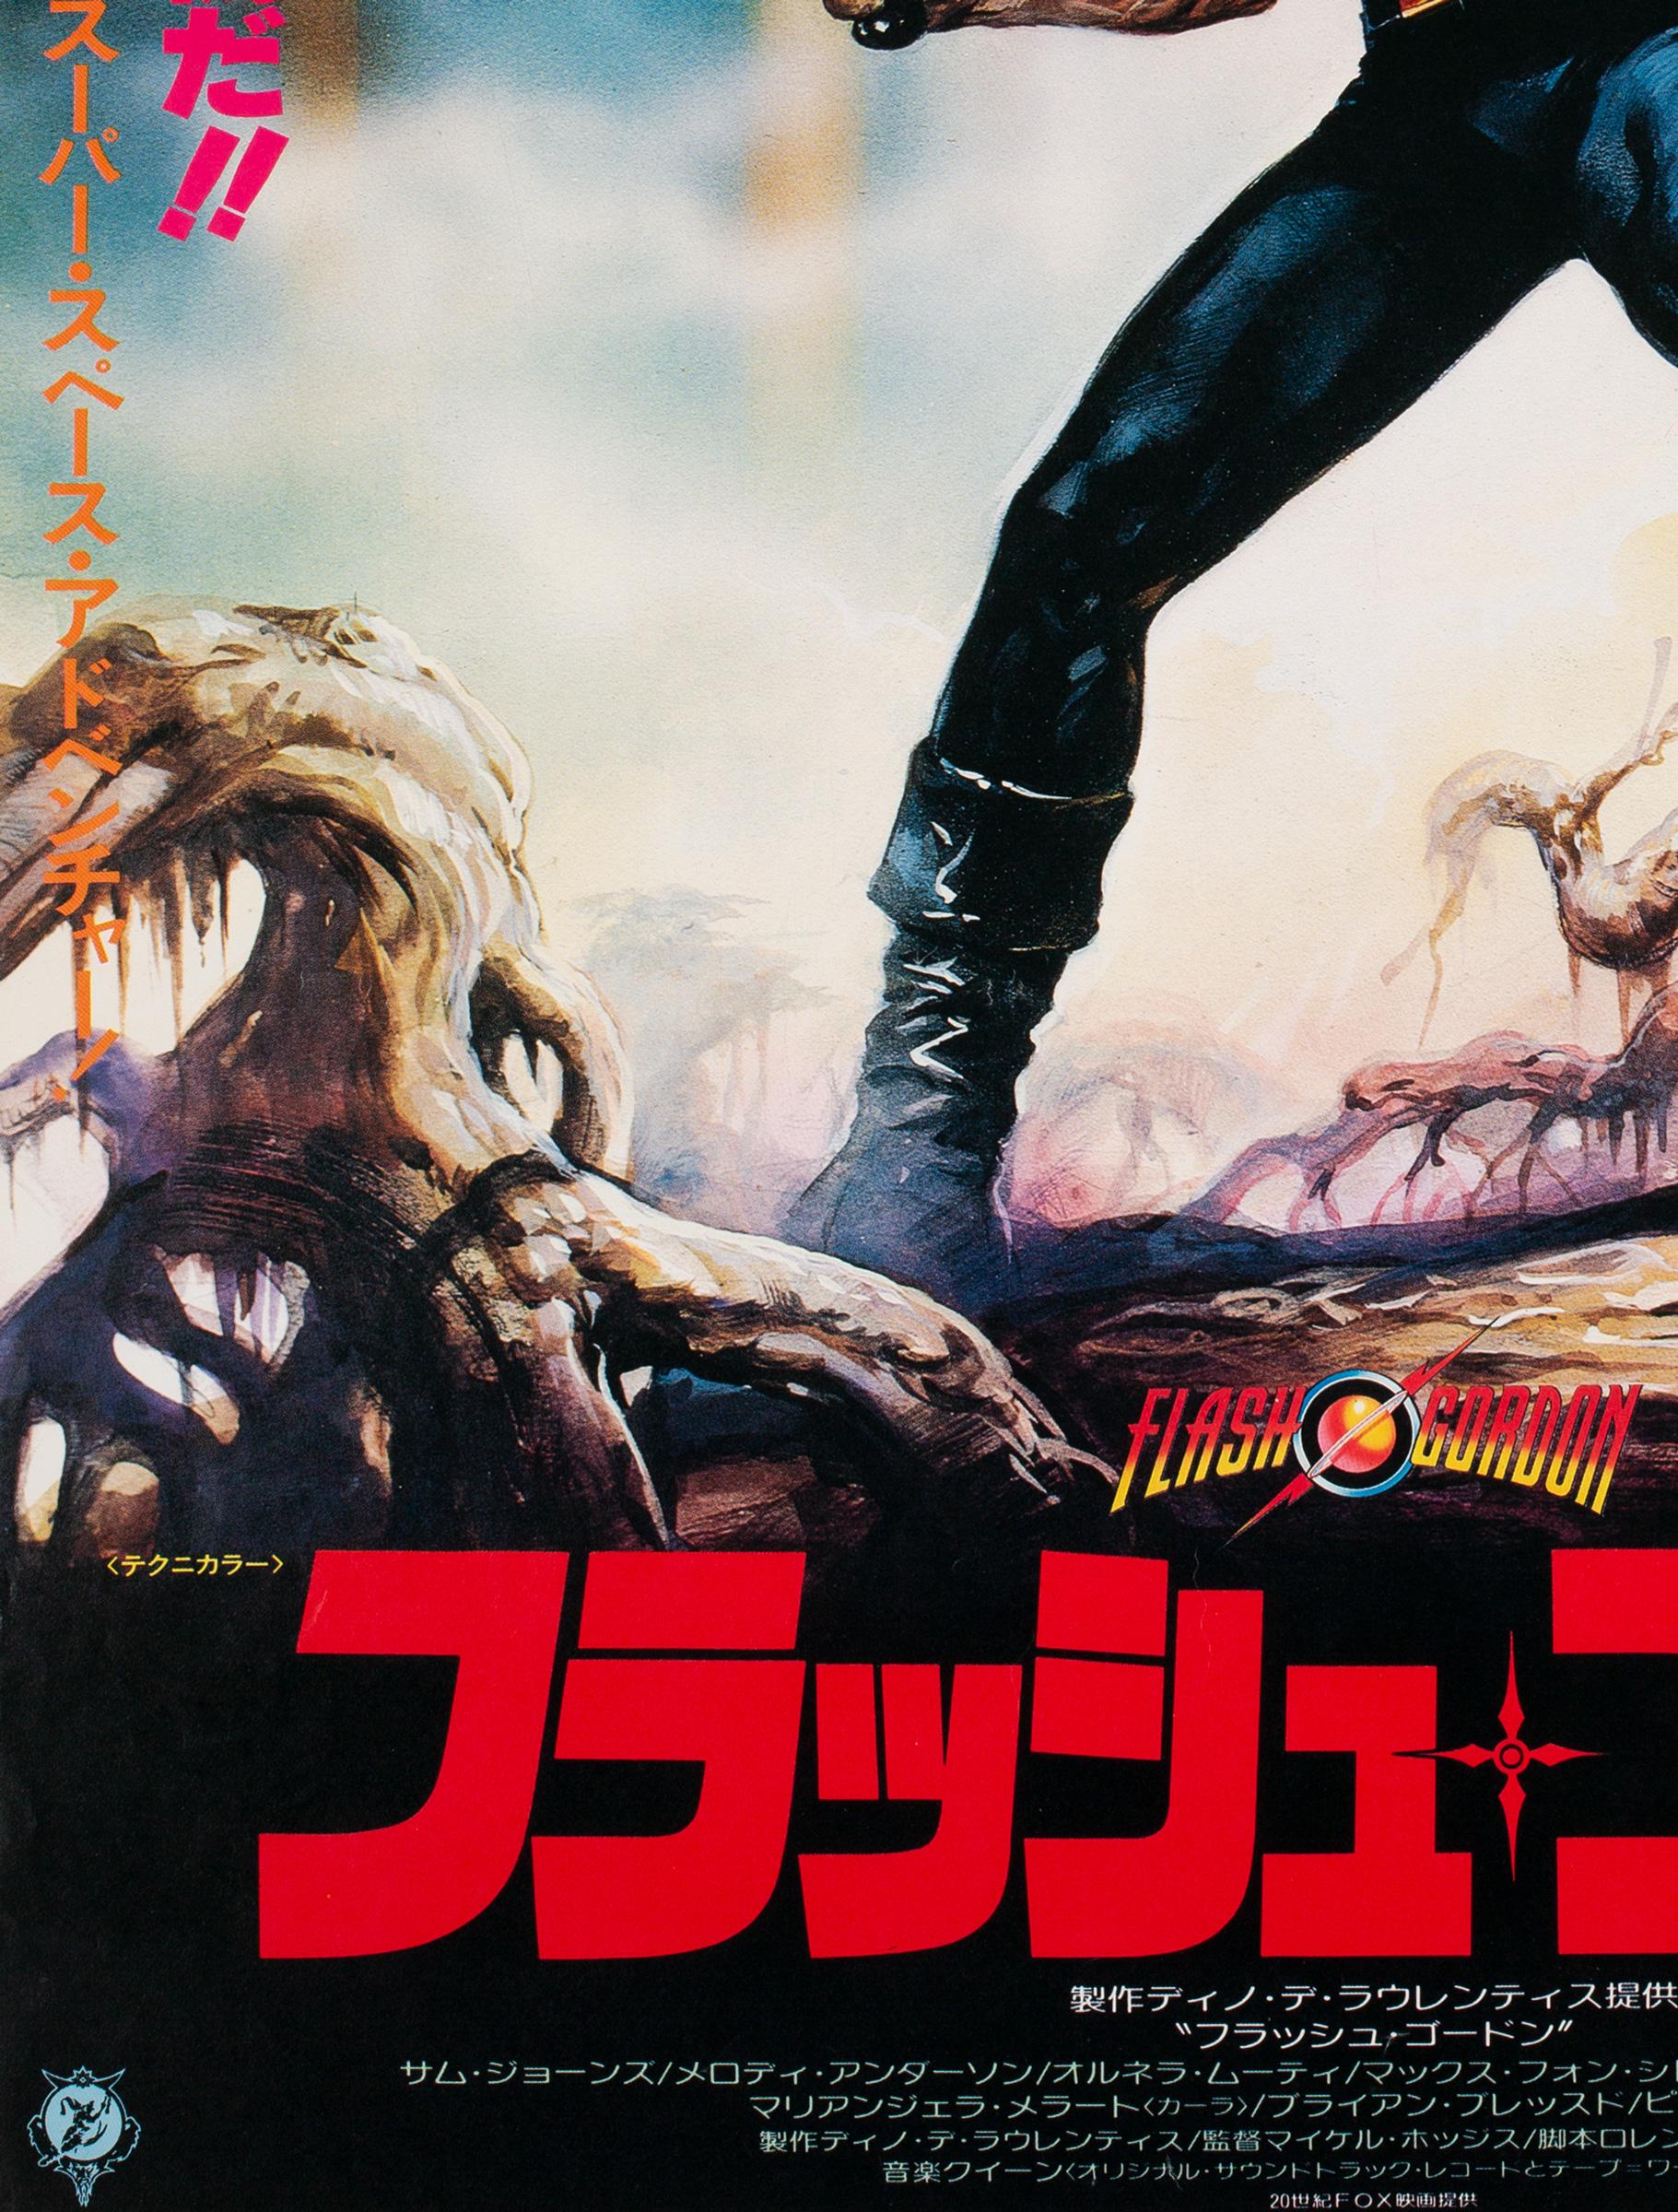 Flash Gordon, Japanese Film Movie Poster, 1980, Casaro 1